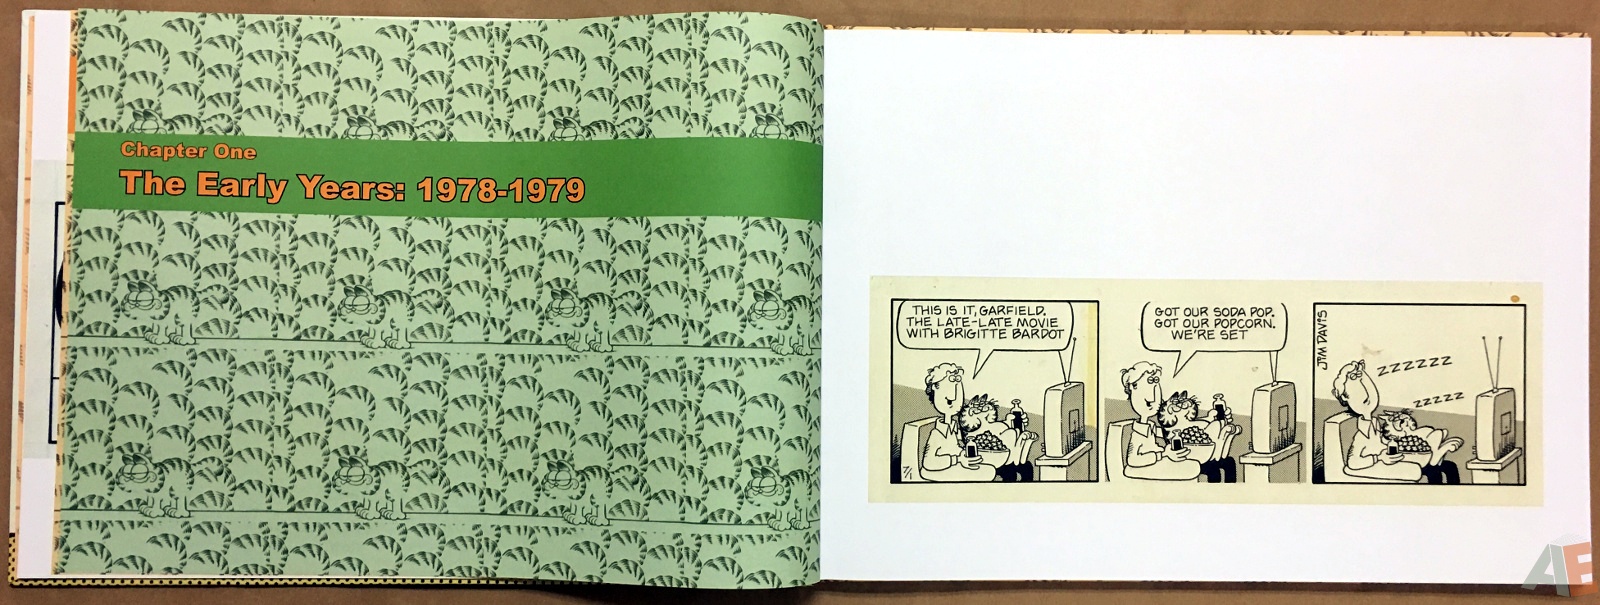 Jim Davis' Garfield: The Original Daily and Sunday Art Archive